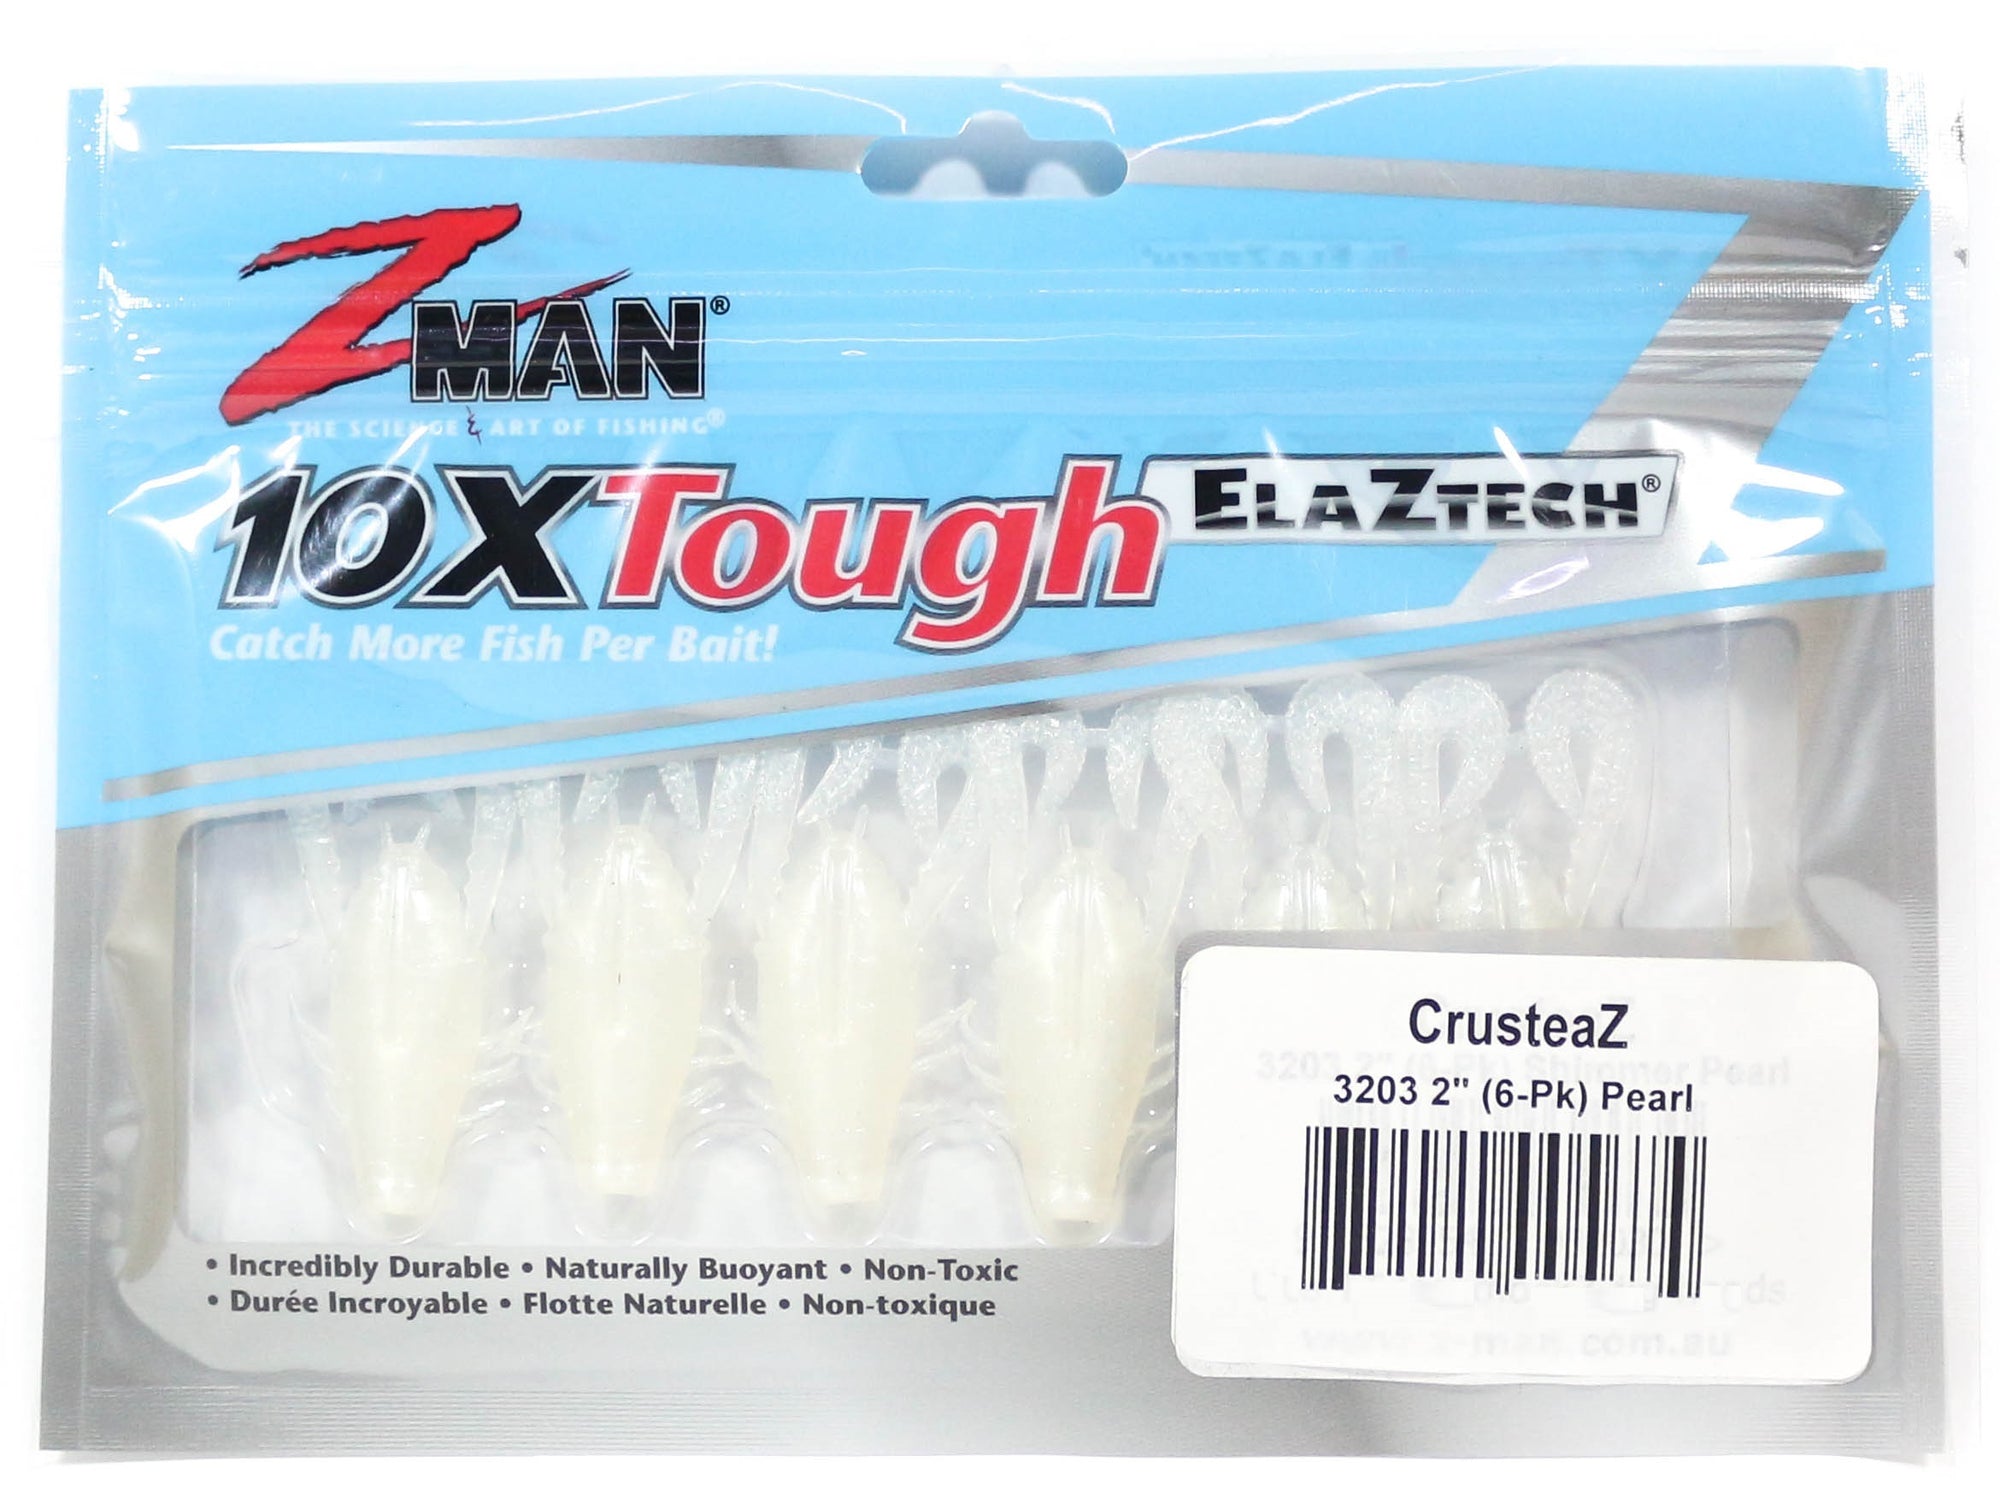 Zman Crusteaz 2 inch Soft Plastic Creature Lure Pearl - Mega